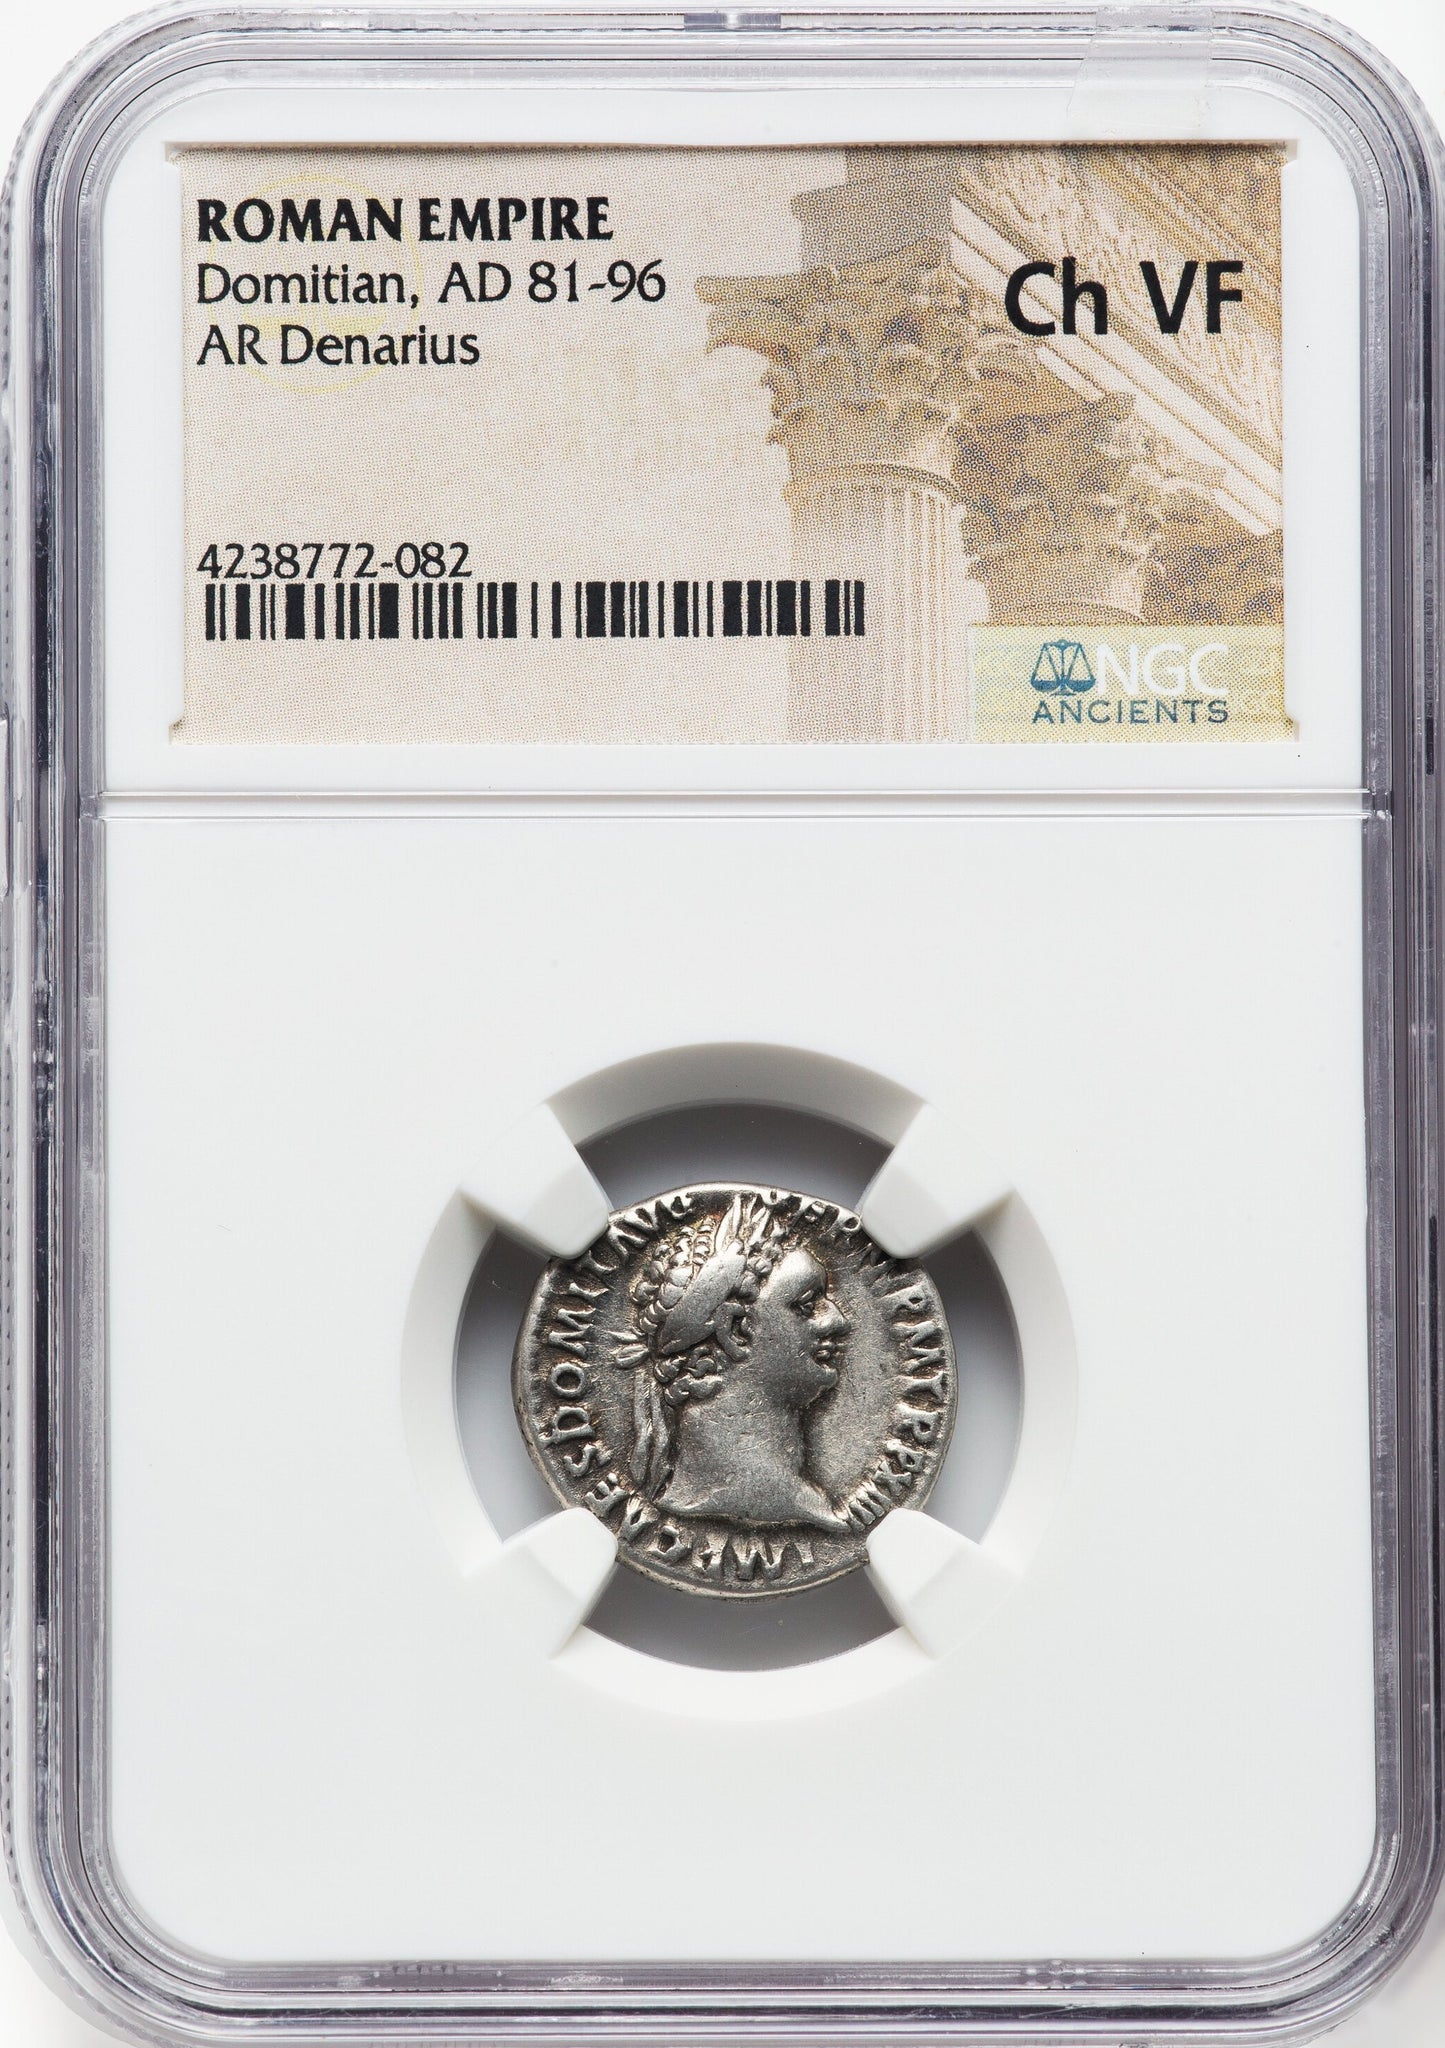 Roman Empire - Domitian - Silver Denarius - NGC Ch VF - RIC:766